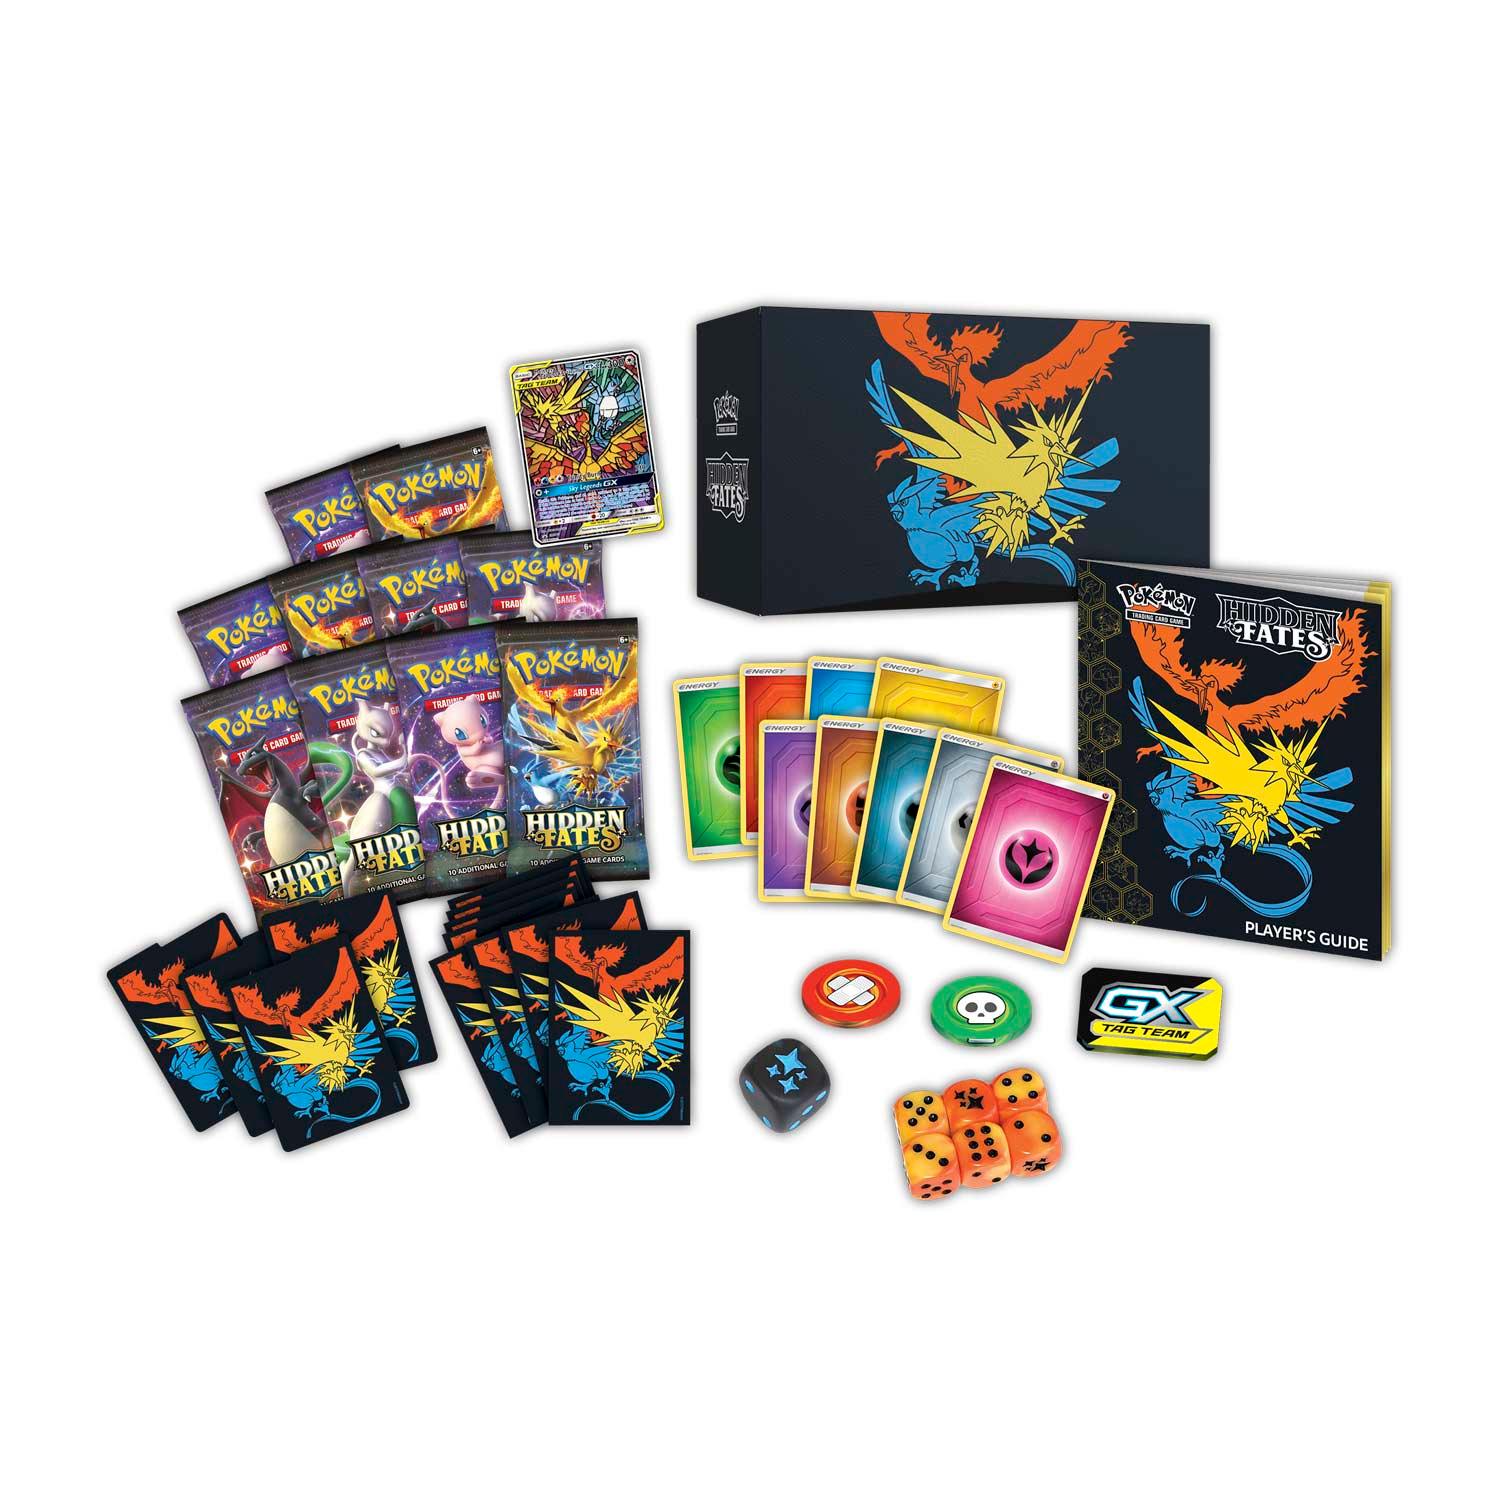 Pokemon Elite Trainer Box (ETB) - Sun & Moon - Hidden Fates (Moltres, Zapdos & Articuno on Cover) - Hobby Champion Inc